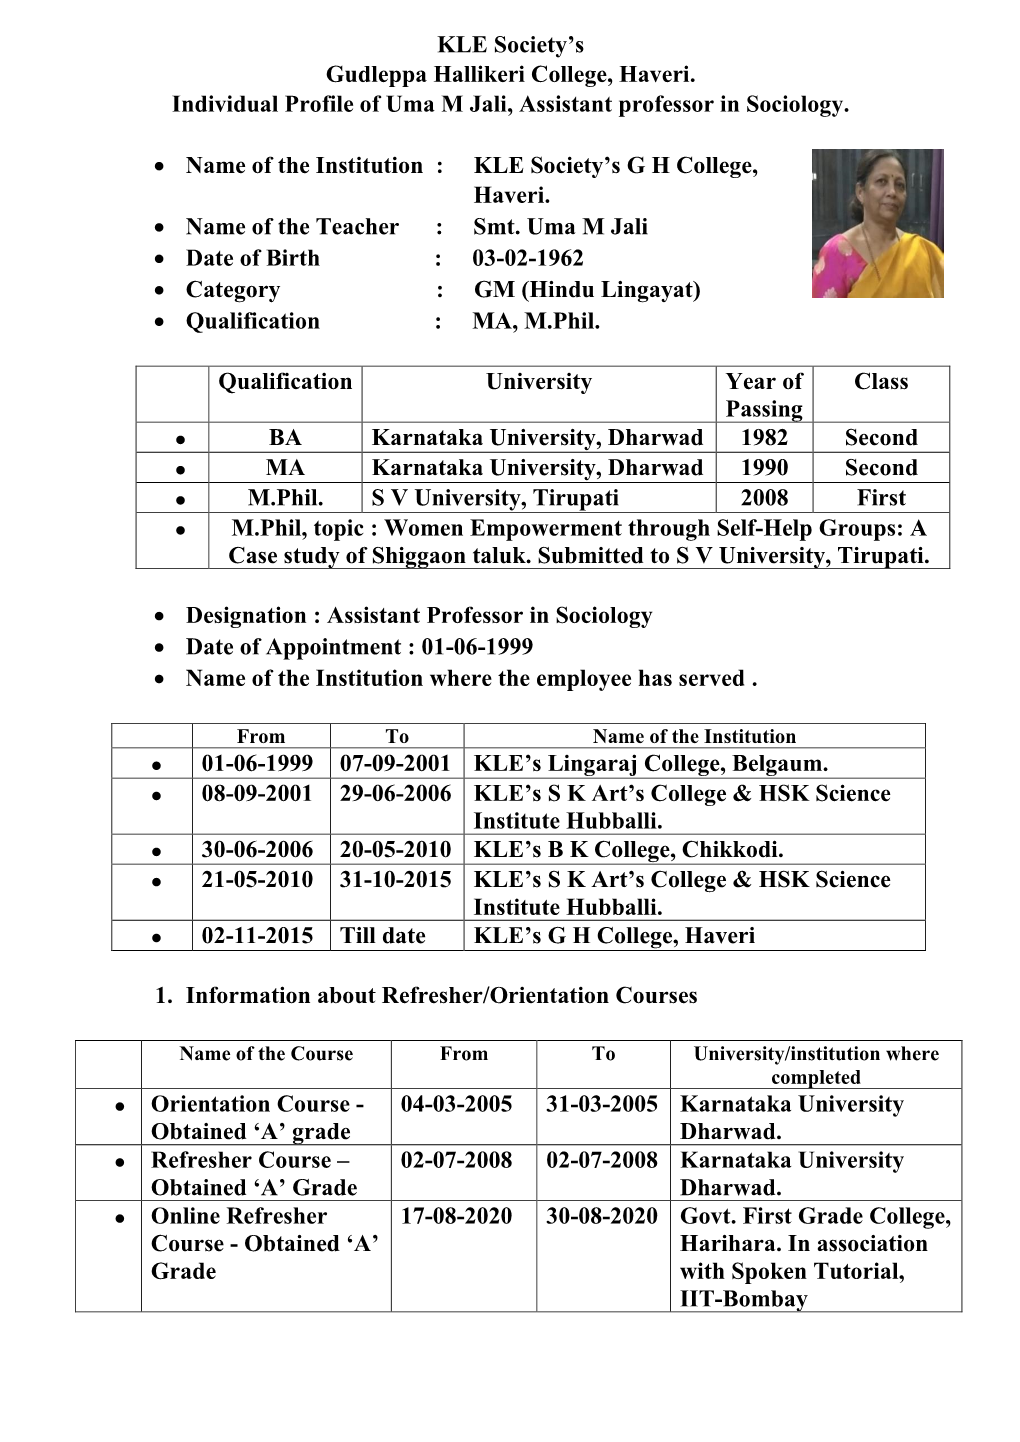 KLE Society's Gudleppa Hallikeri College, Haveri. Individual Profile Of